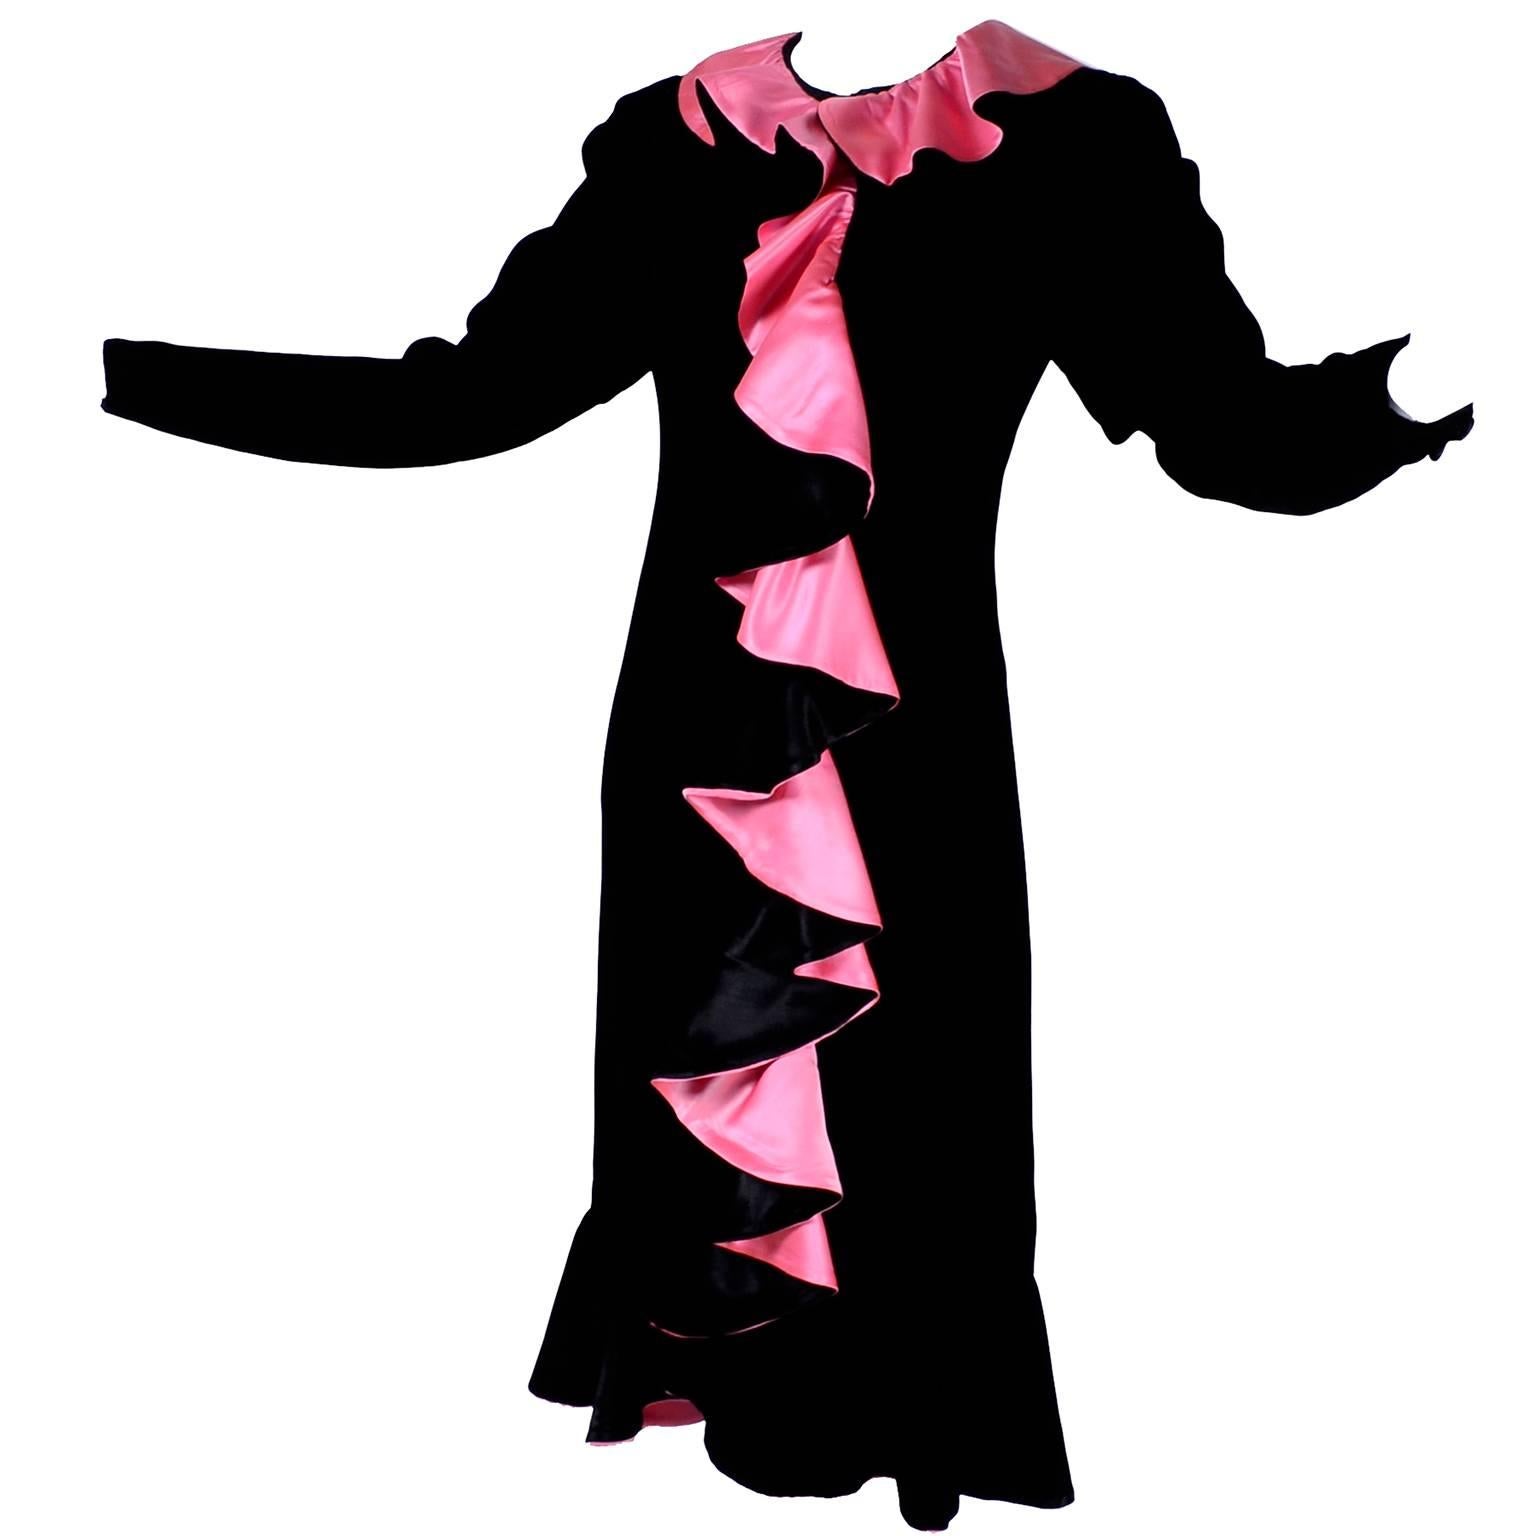 1980s Oscar de la Renta Vintage Dress in Black Velvet with Pink Satin Ruffles